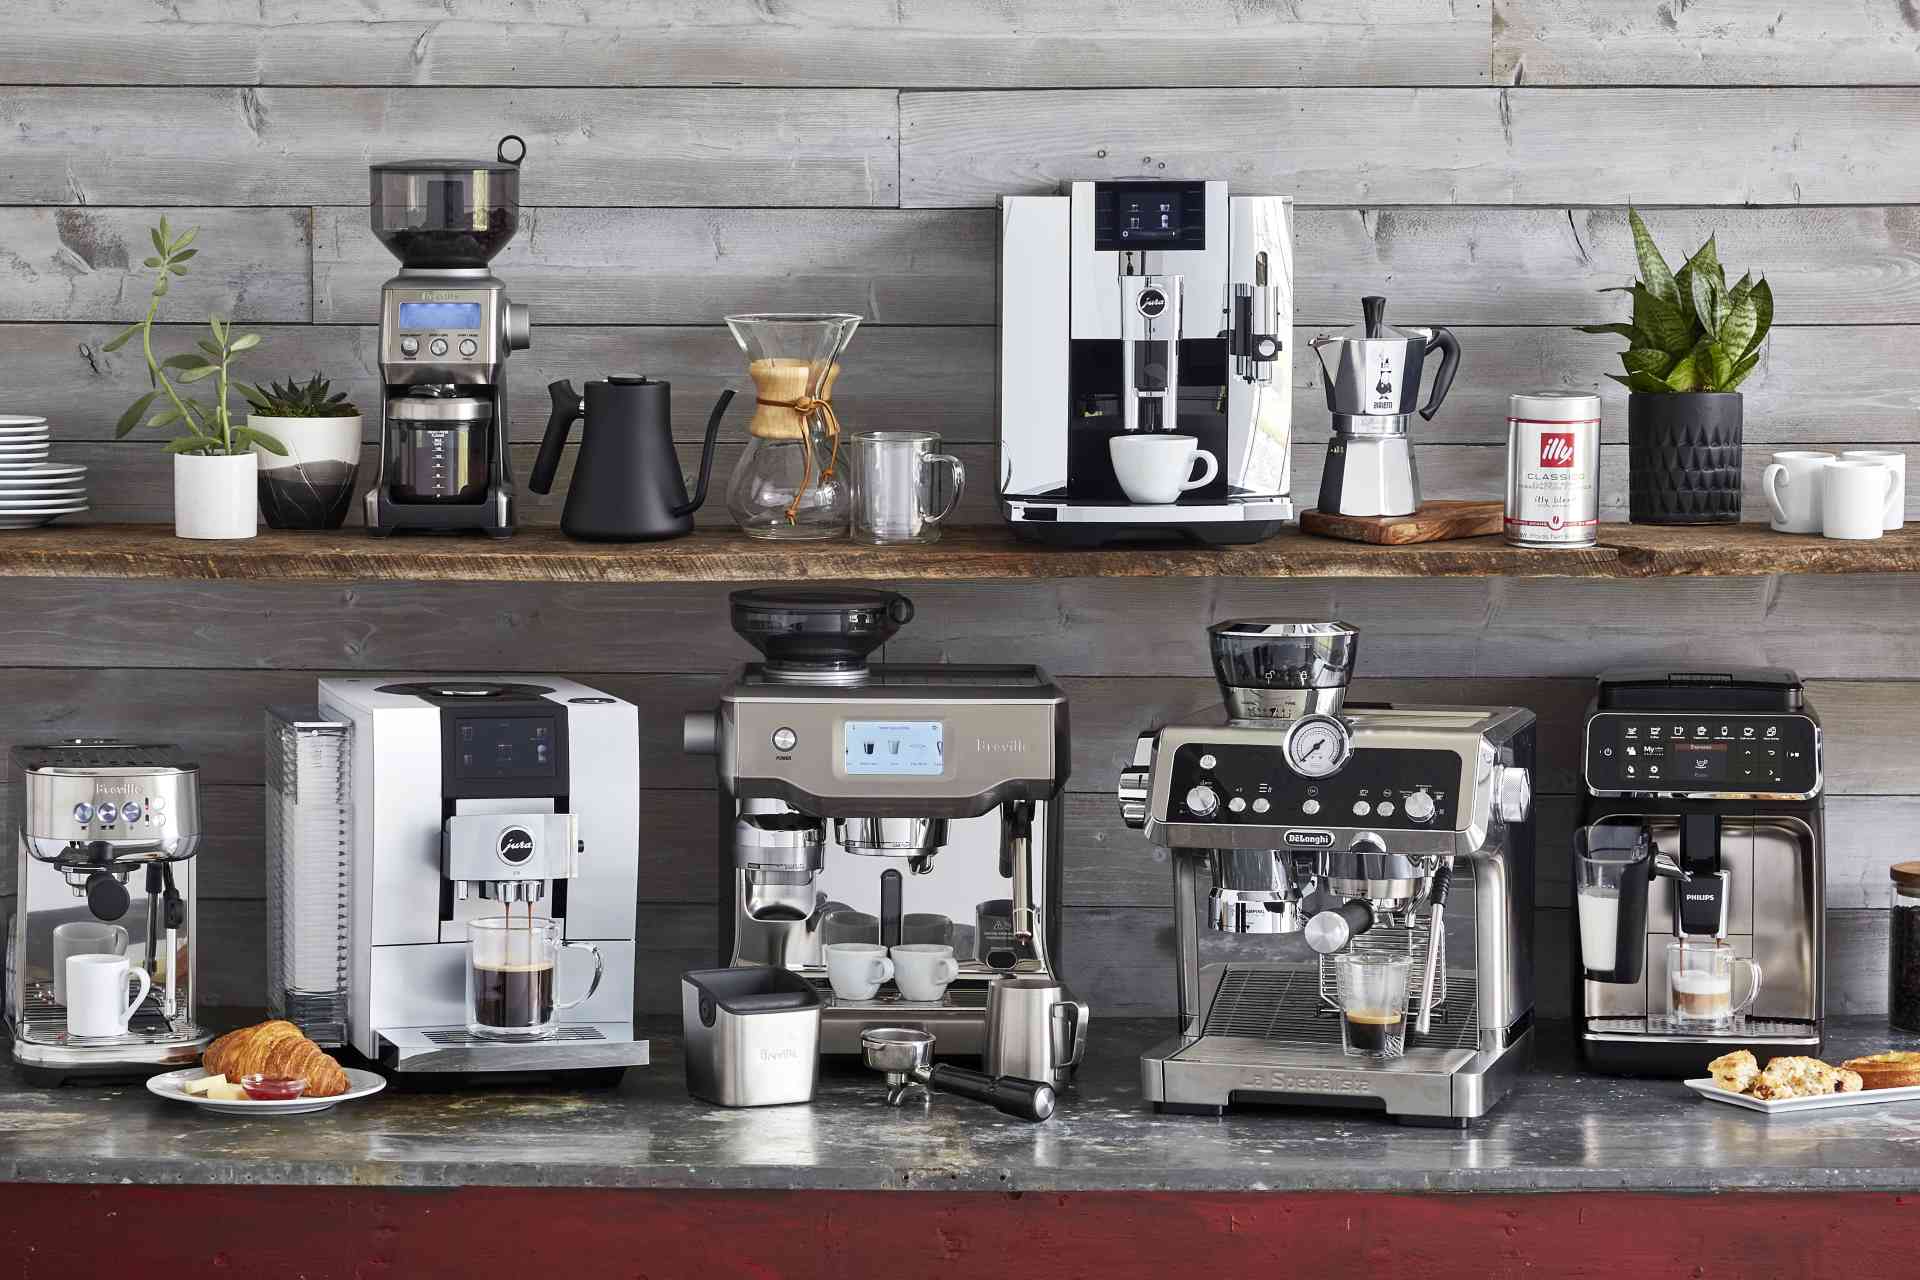 Our #1 Wish List Item This Holiday Season: Espresso Machines